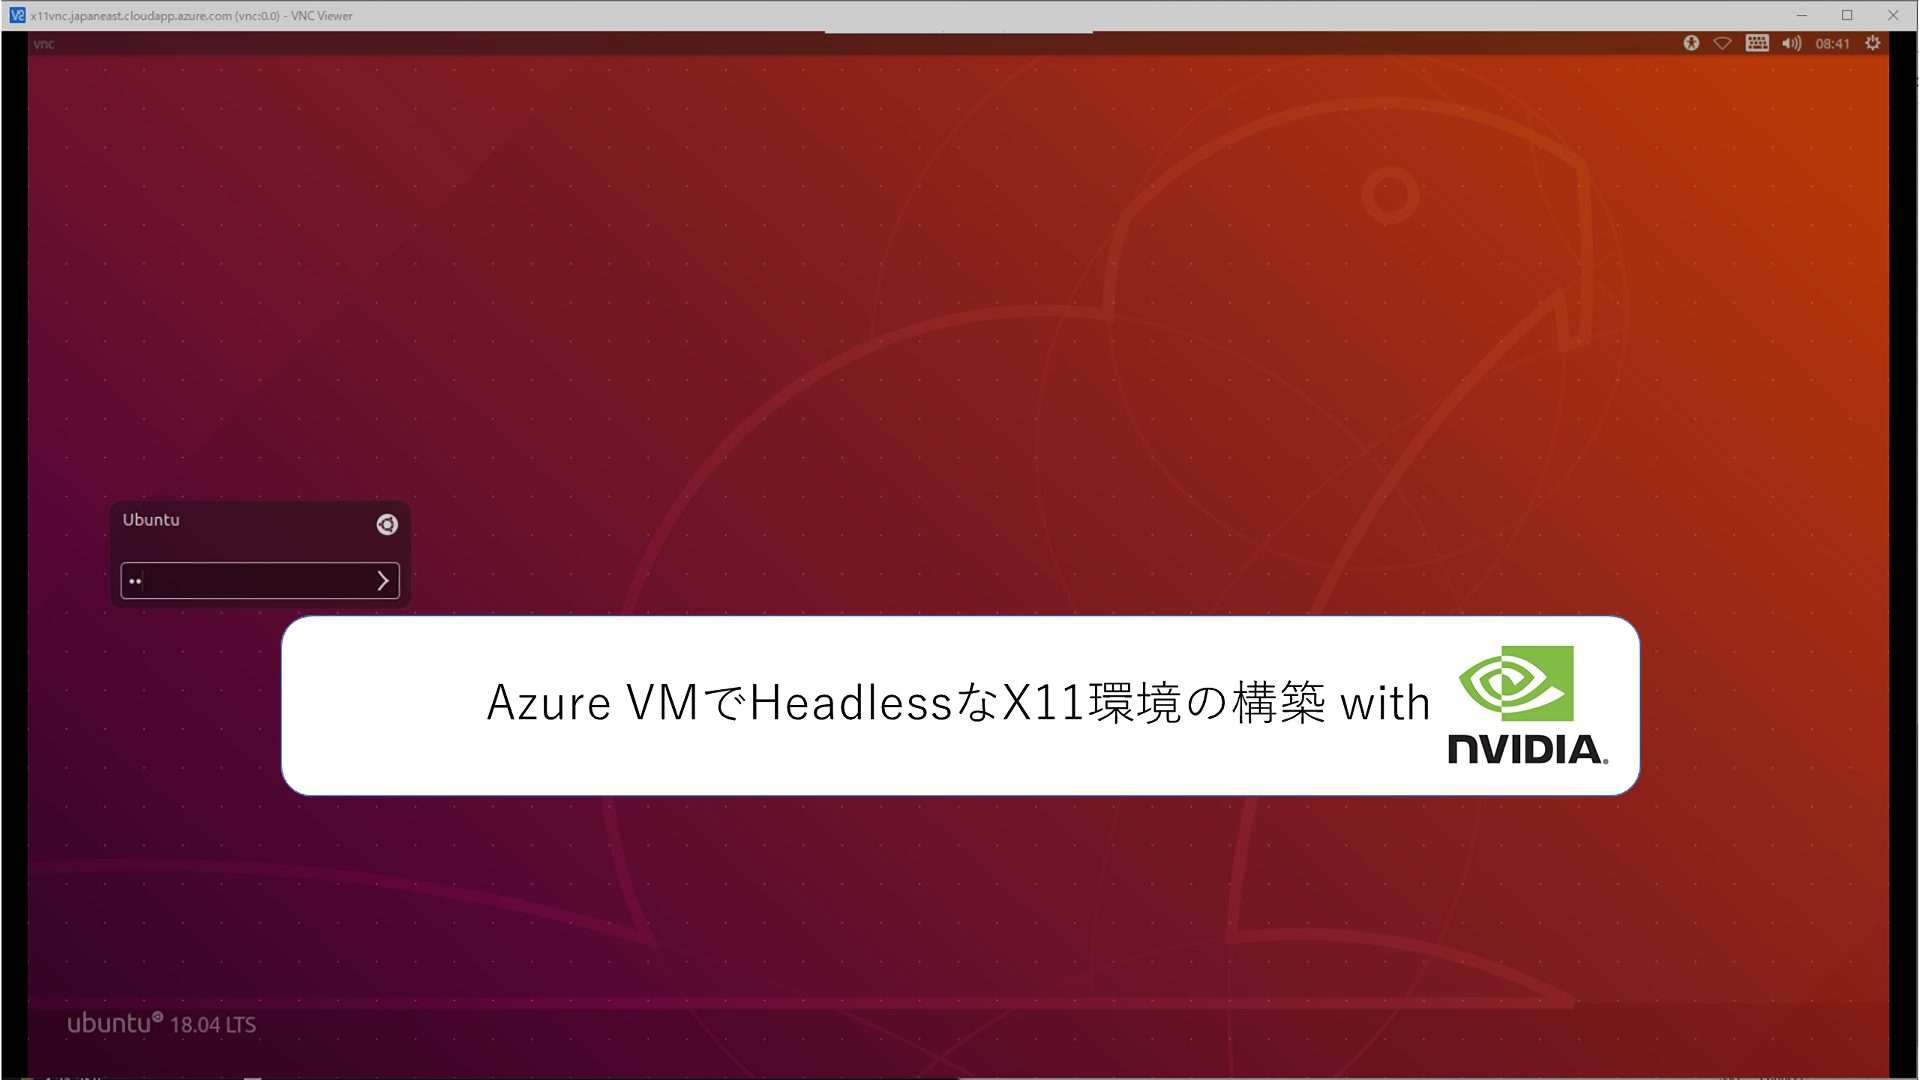 Azure Linux VMでGPUが使えるGUI環境を構築してみる